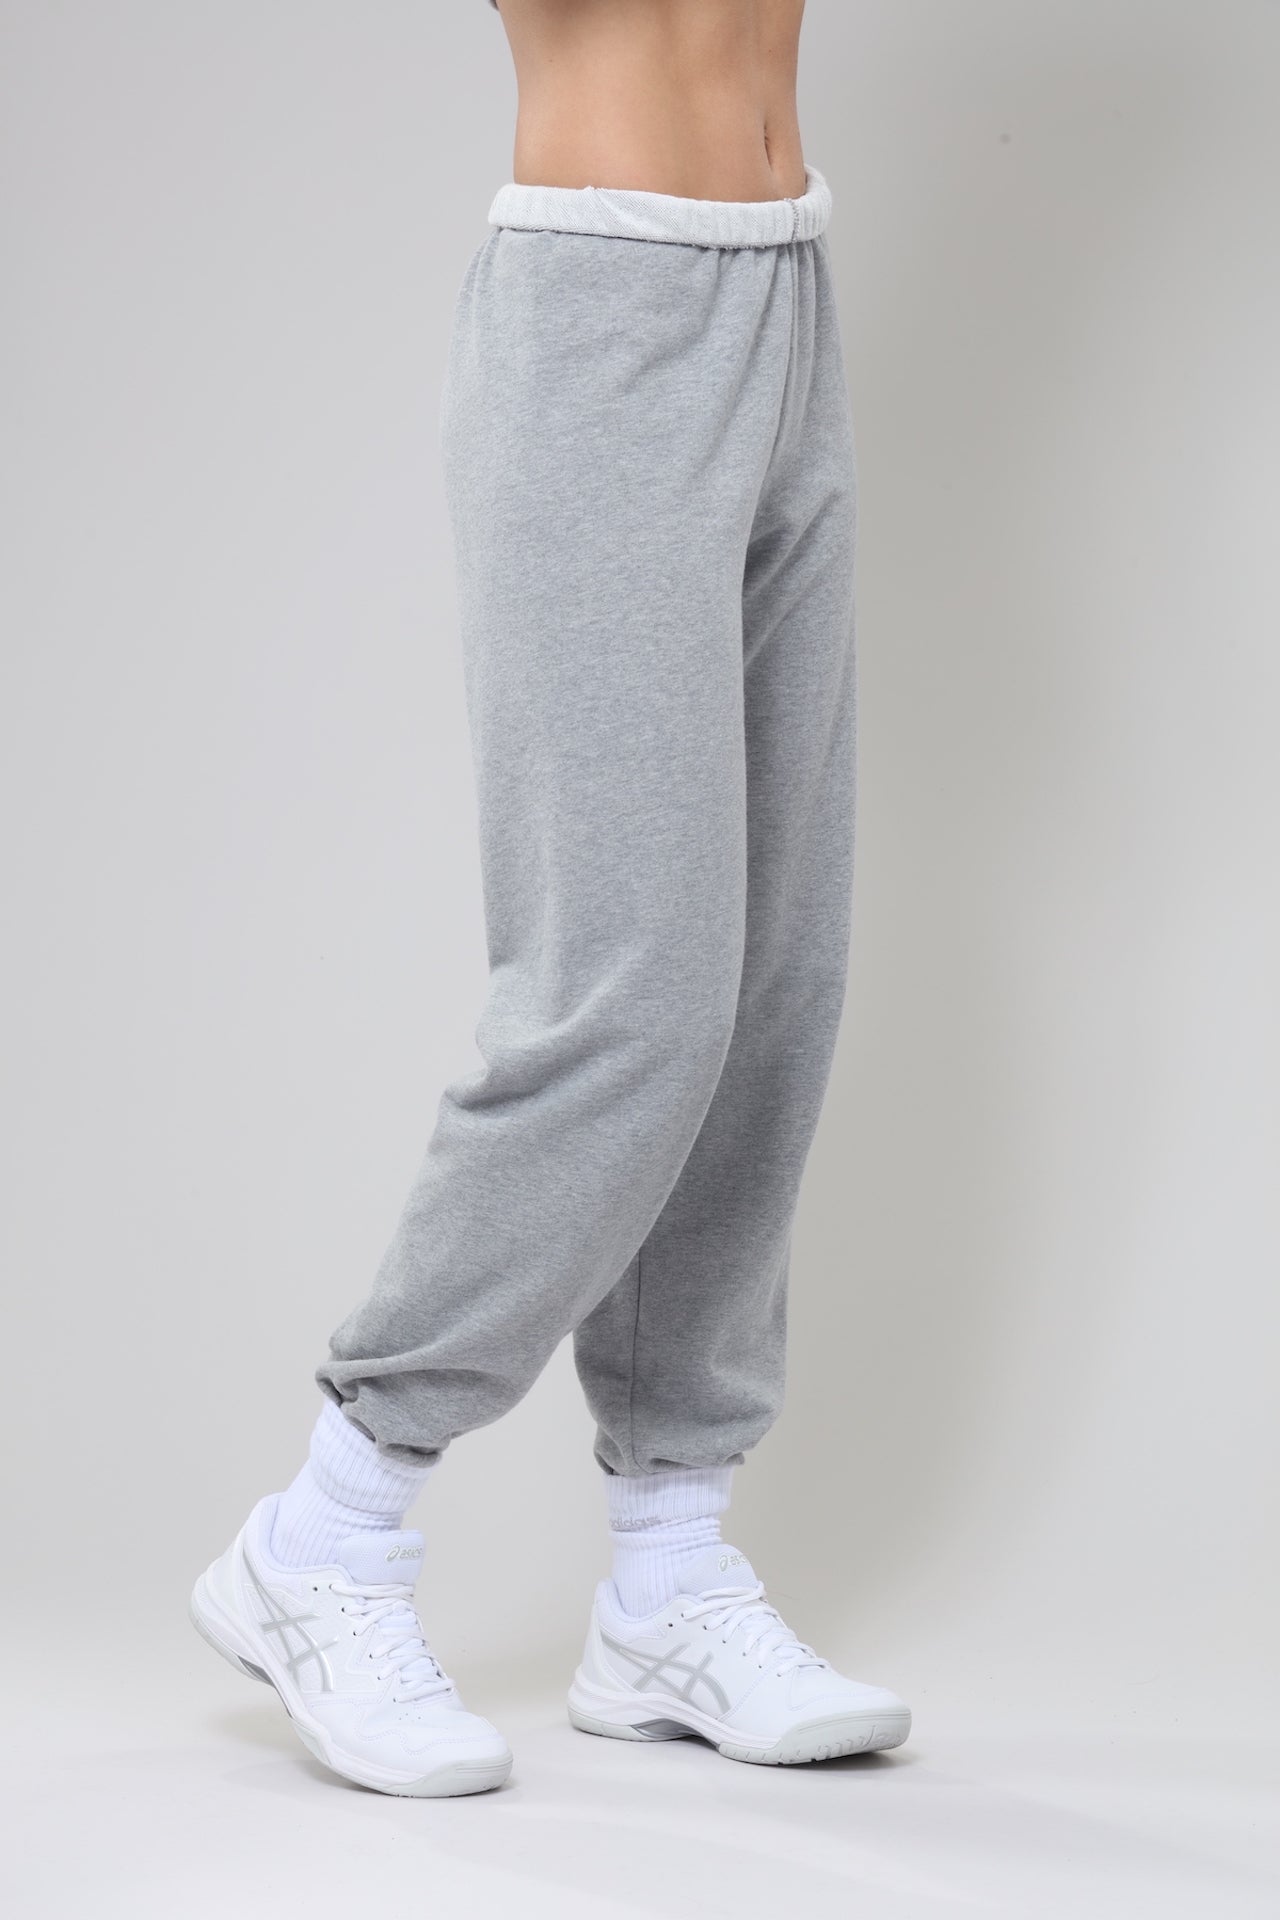 heather grey sweatpants set